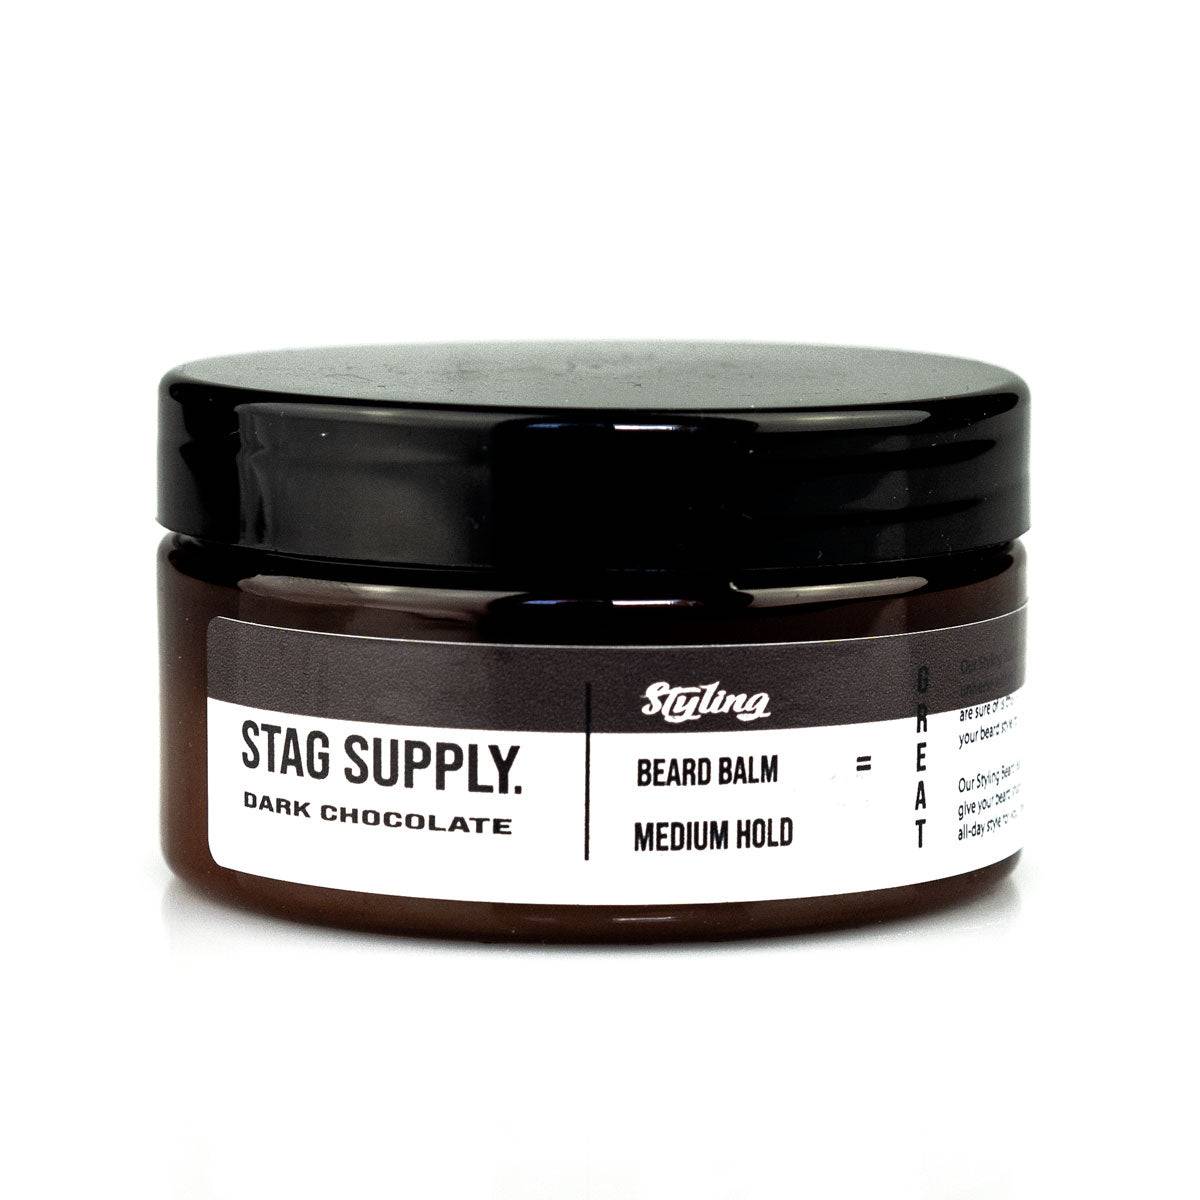 Stag Supply Dark Chocolate Styling Beard Balm 100ml